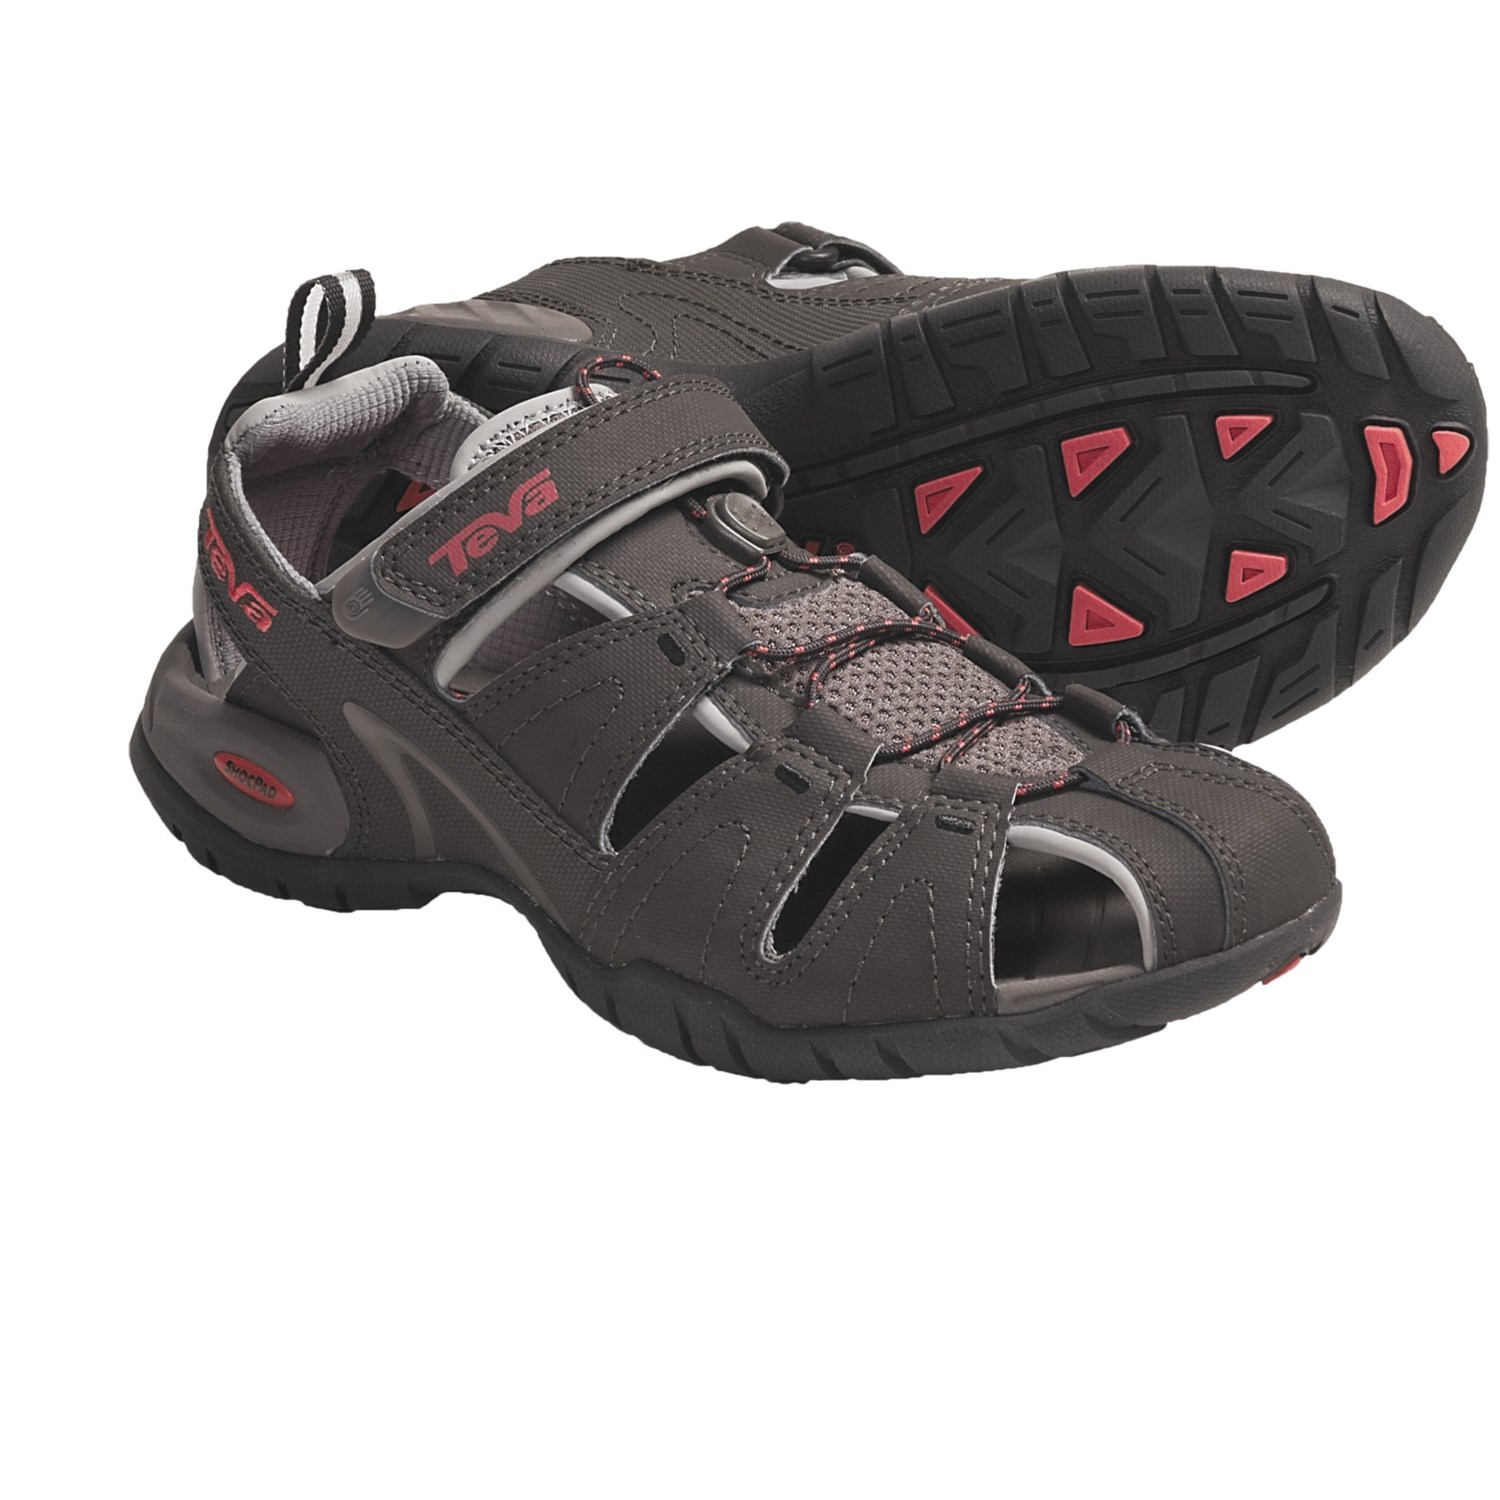 Teva Dozer III Sandals (For Women) - Save 36%